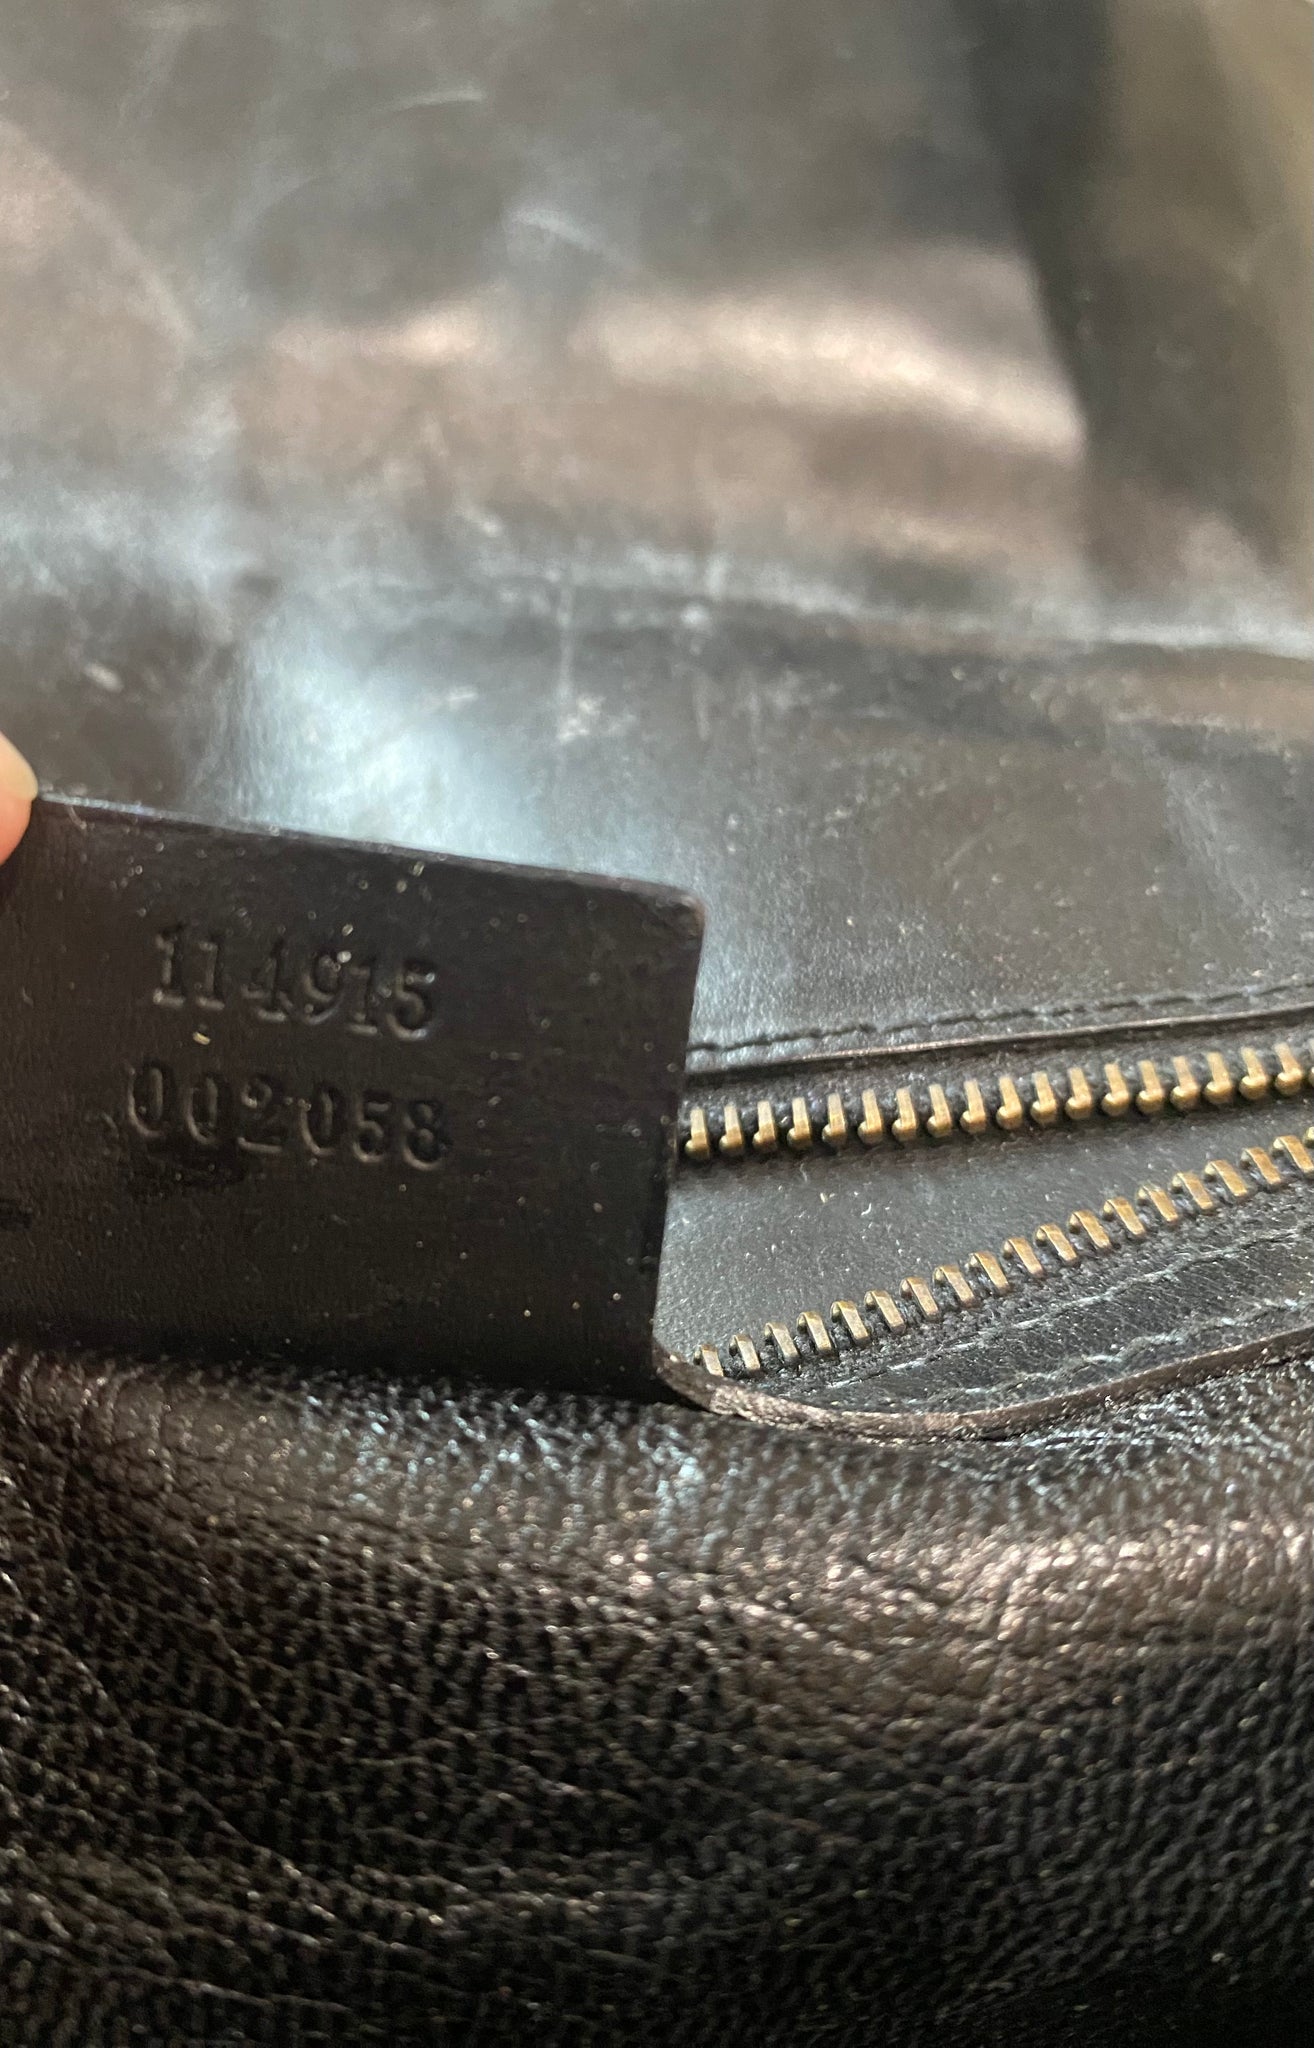 Gucci Authentic Very Rare Vintage Horsebit Baguette Shoulder Bag by Tom Ford